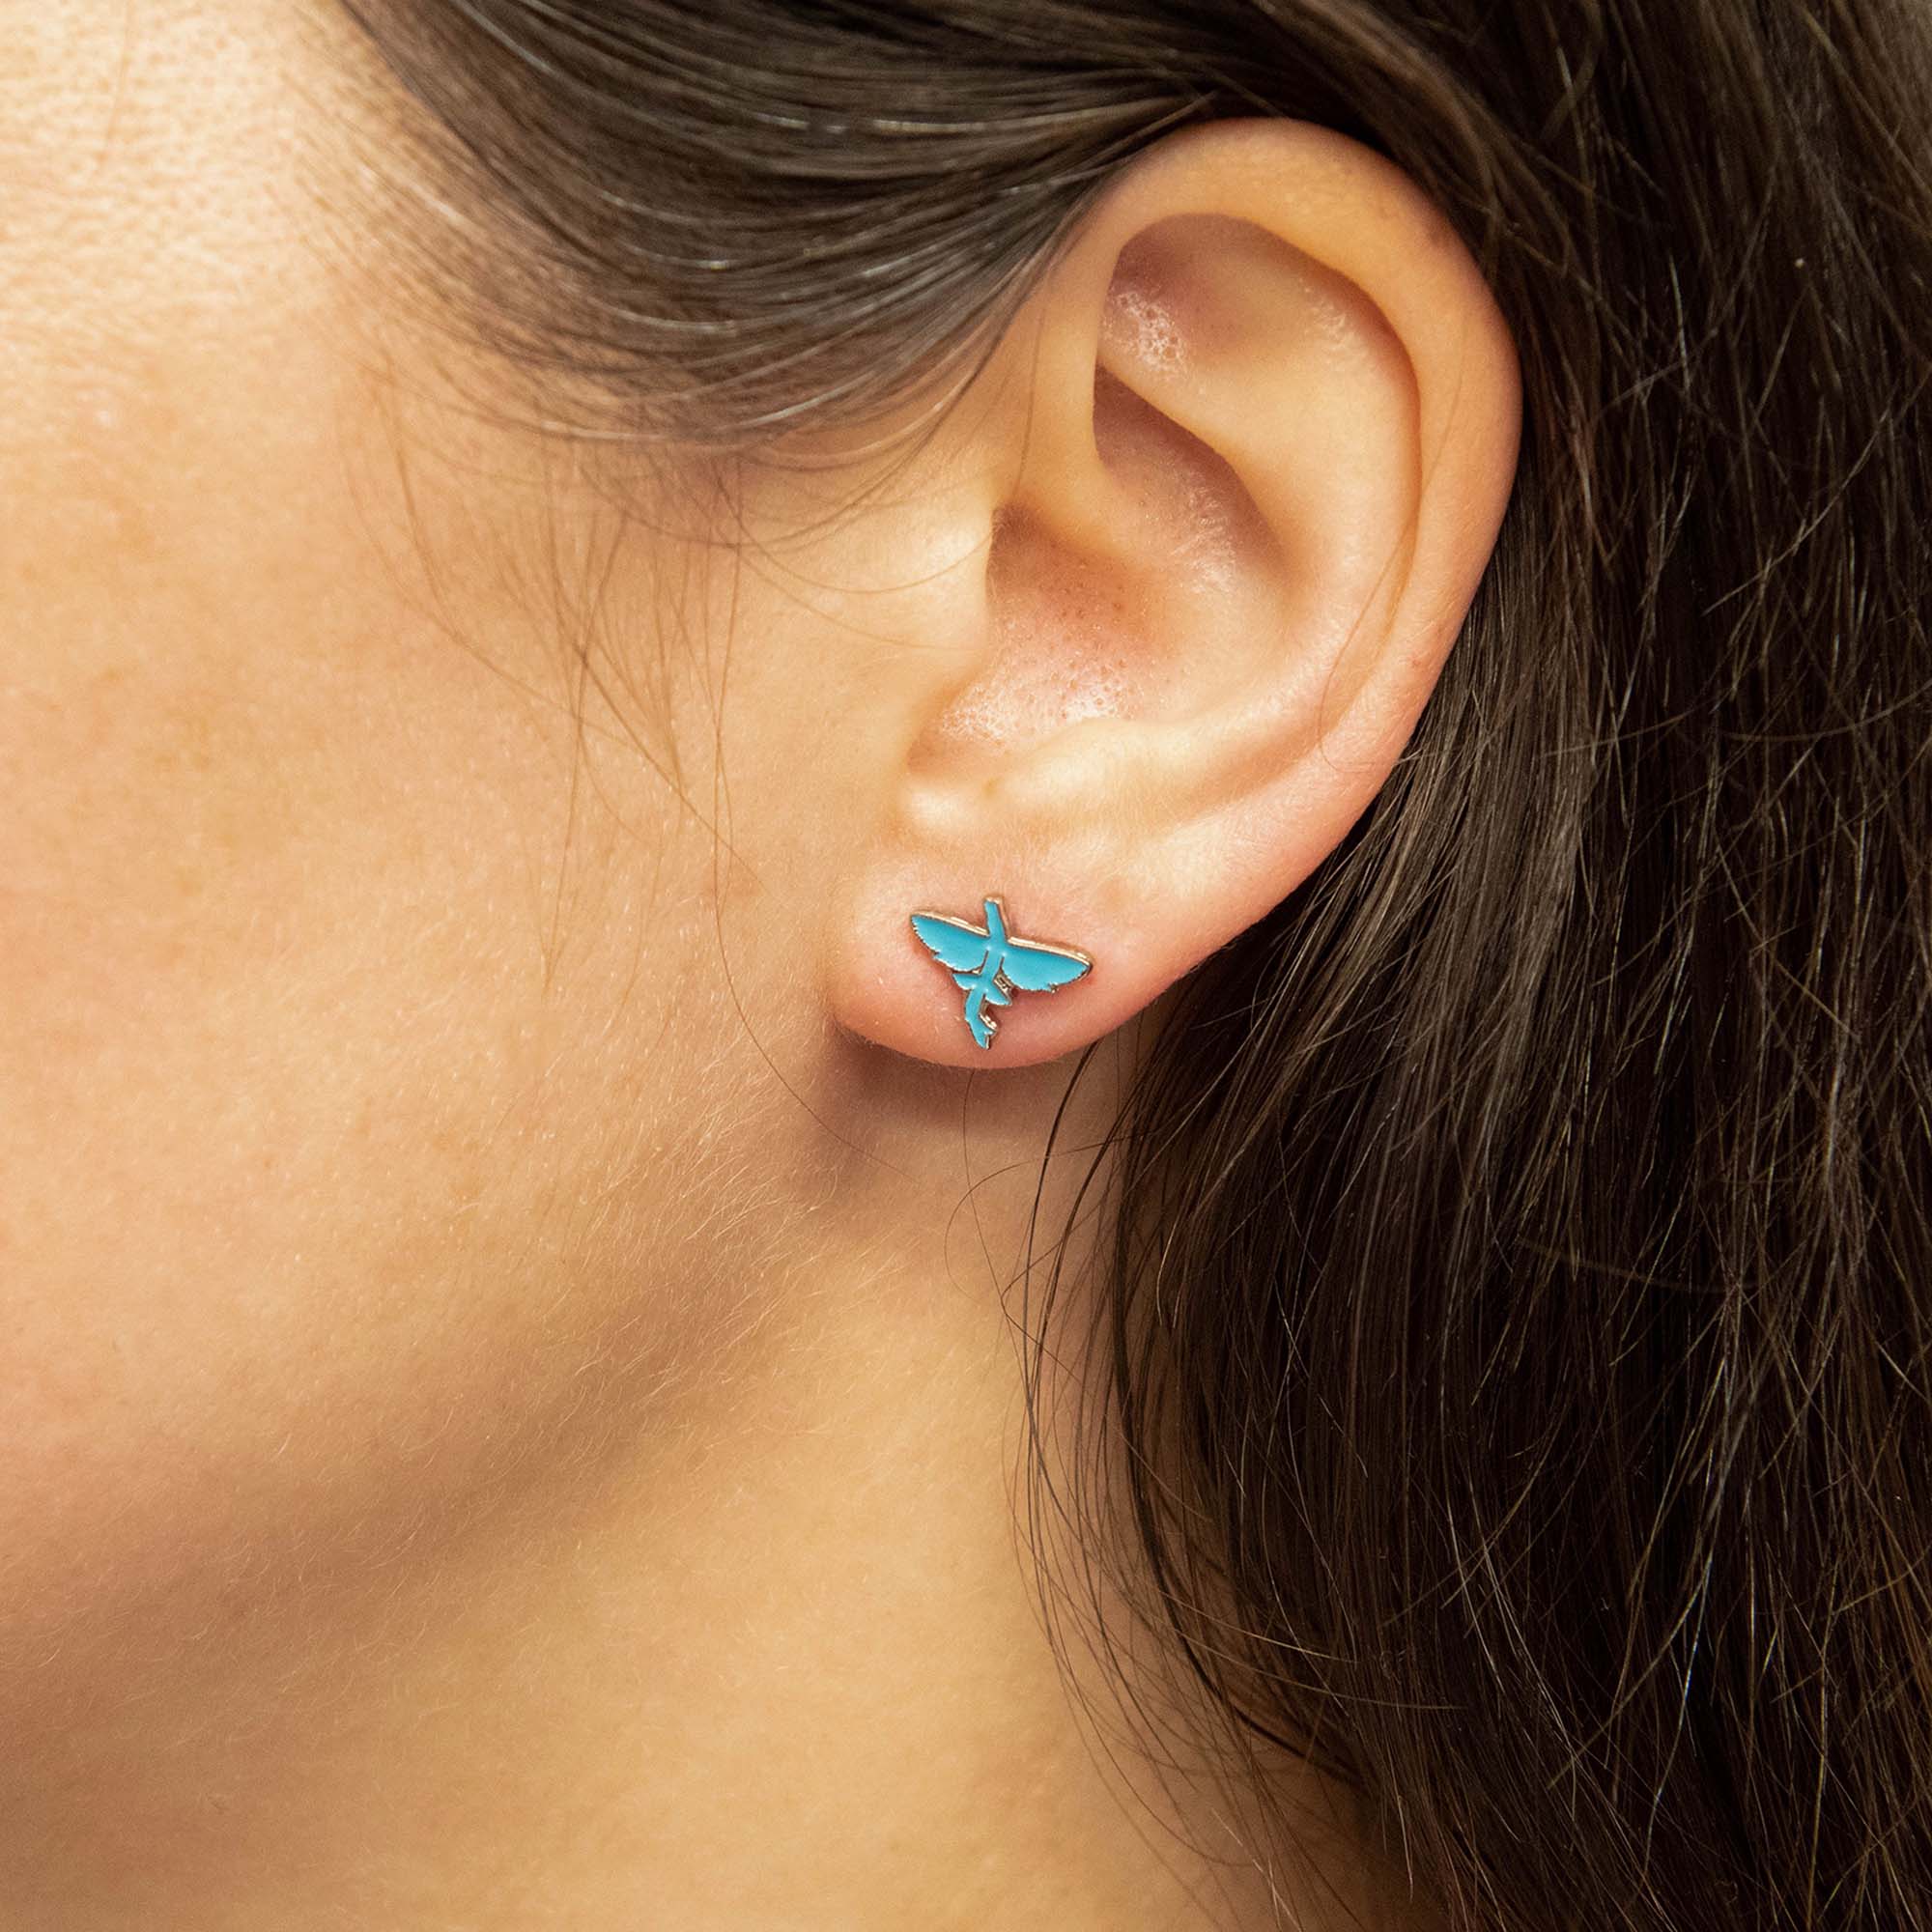 Avatar 2 Set Of 4 Pairs Of Stud Earrings